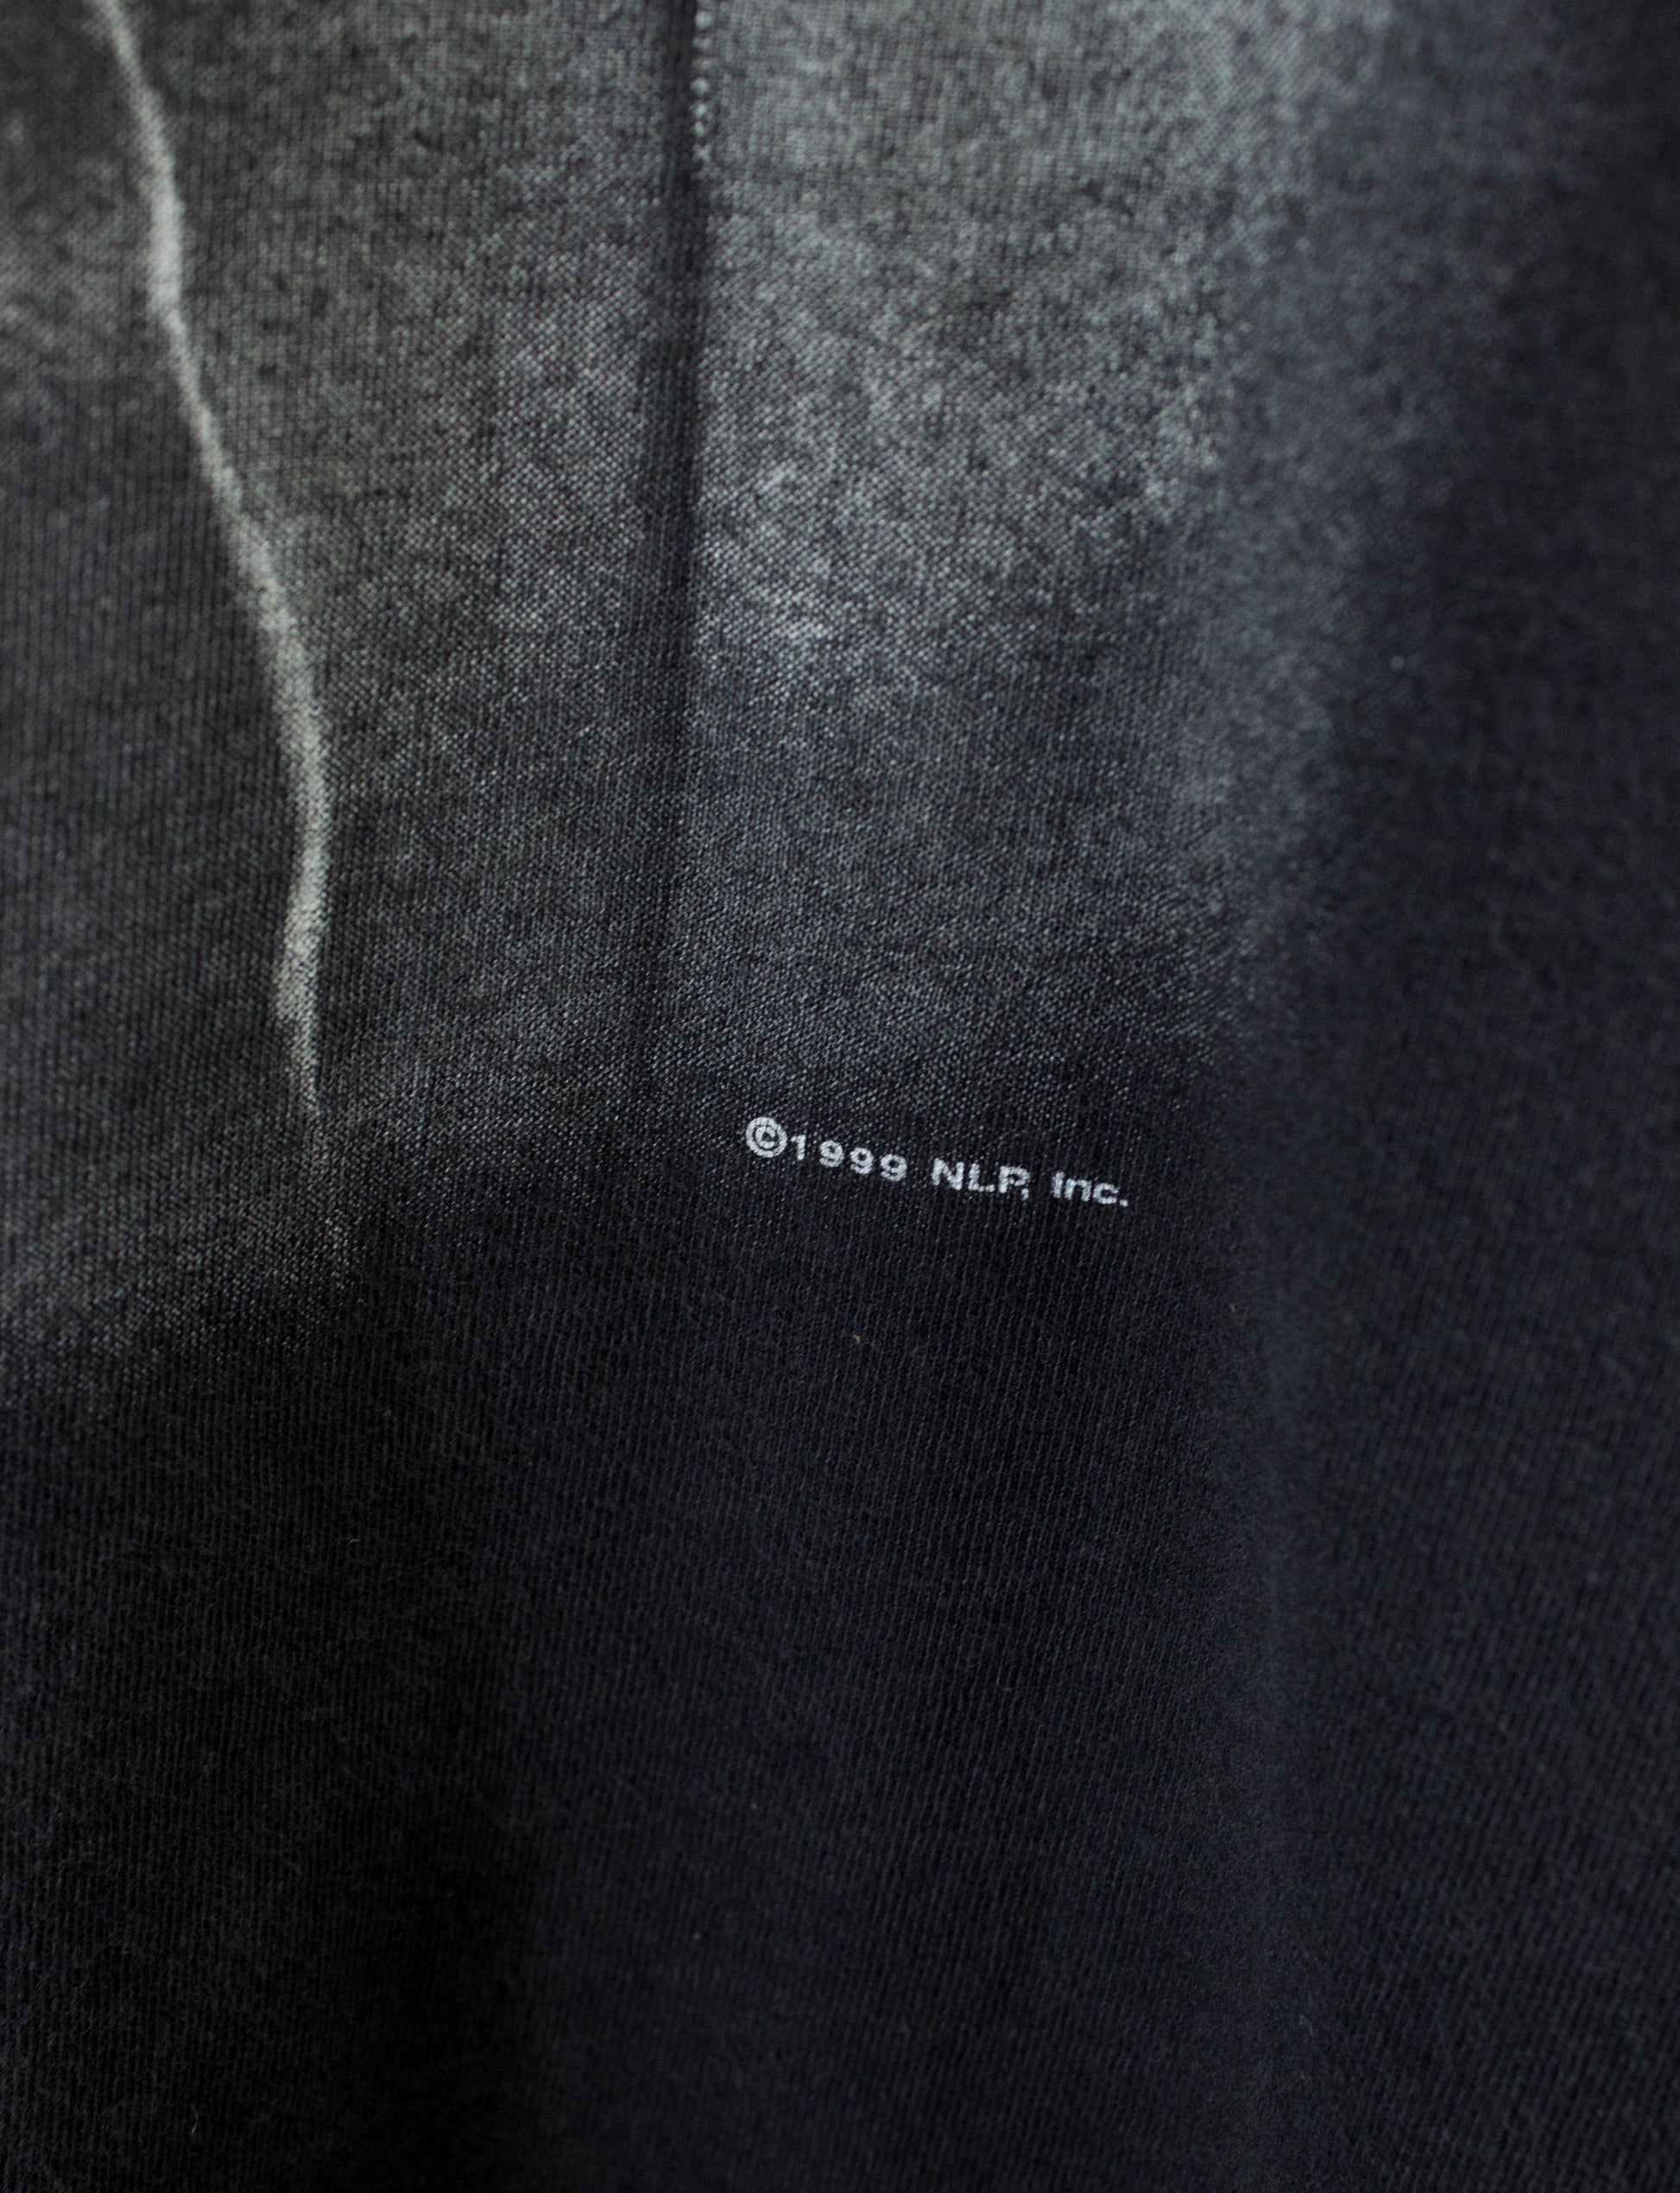 1999 Dr Evil and Mini Me Virtucon Industries Black Graphic T Shirt Unisex XL